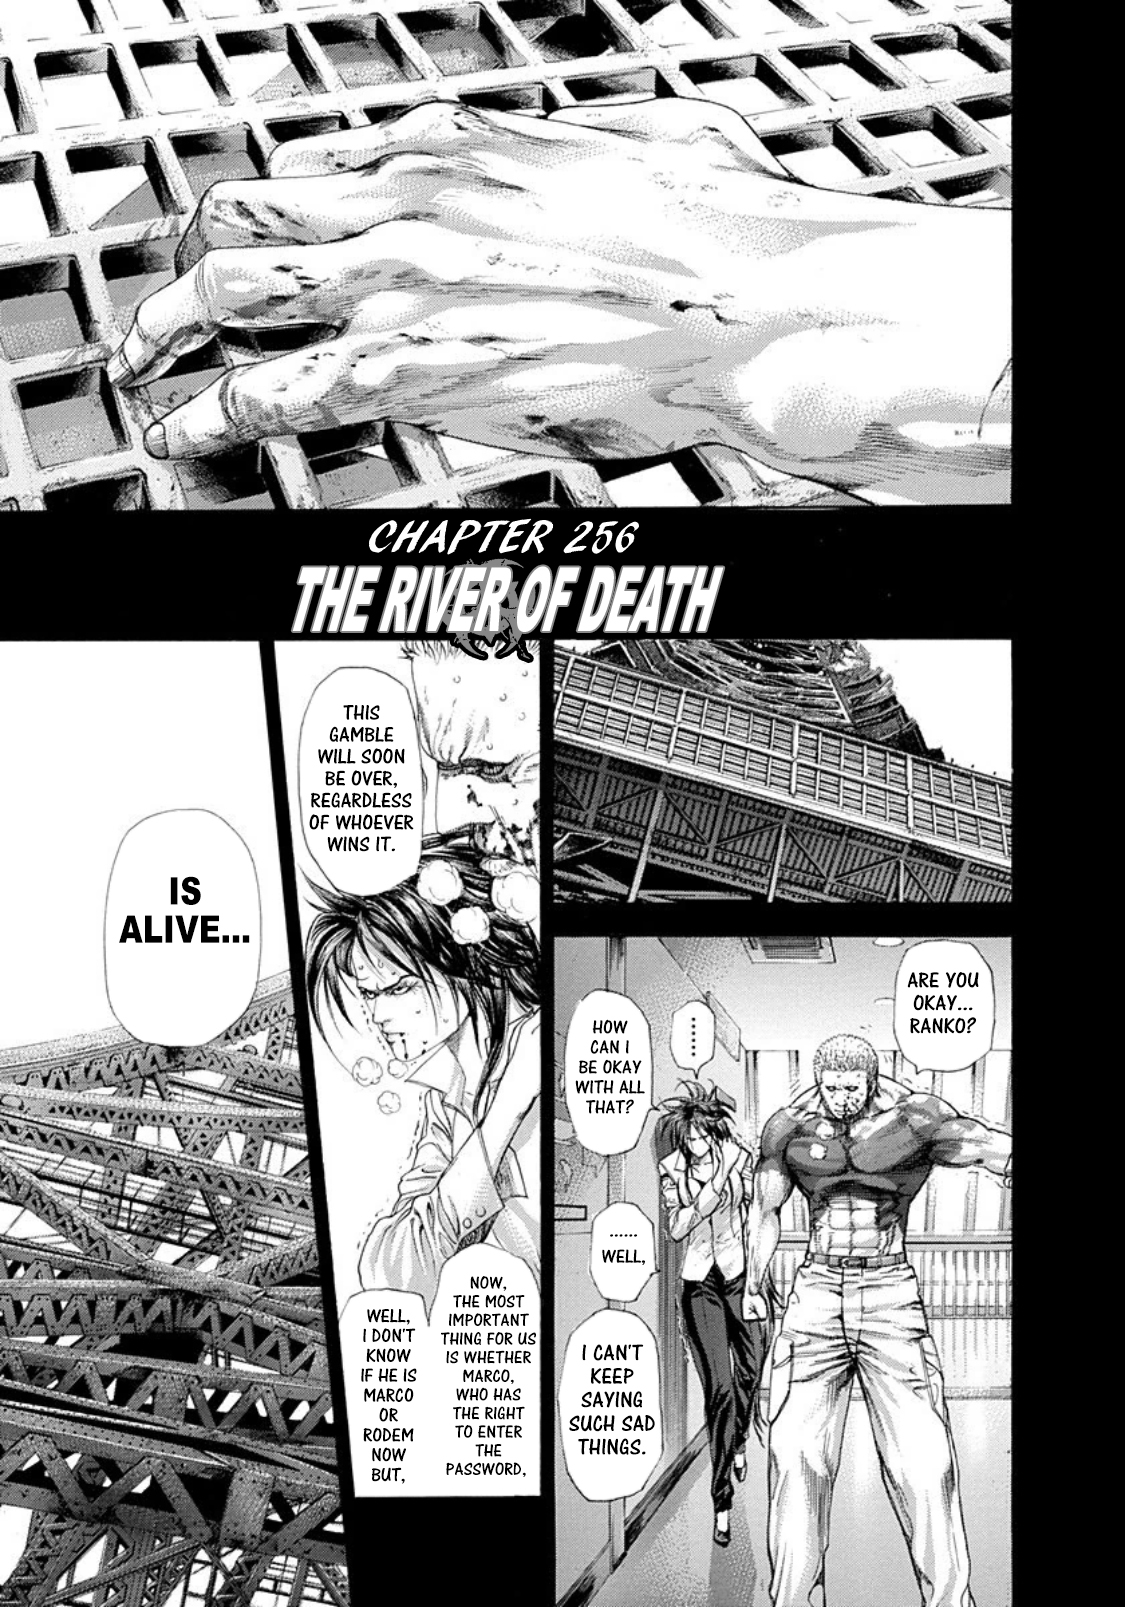 Usogui Vol. 24 Ch. 256 The River Of Death